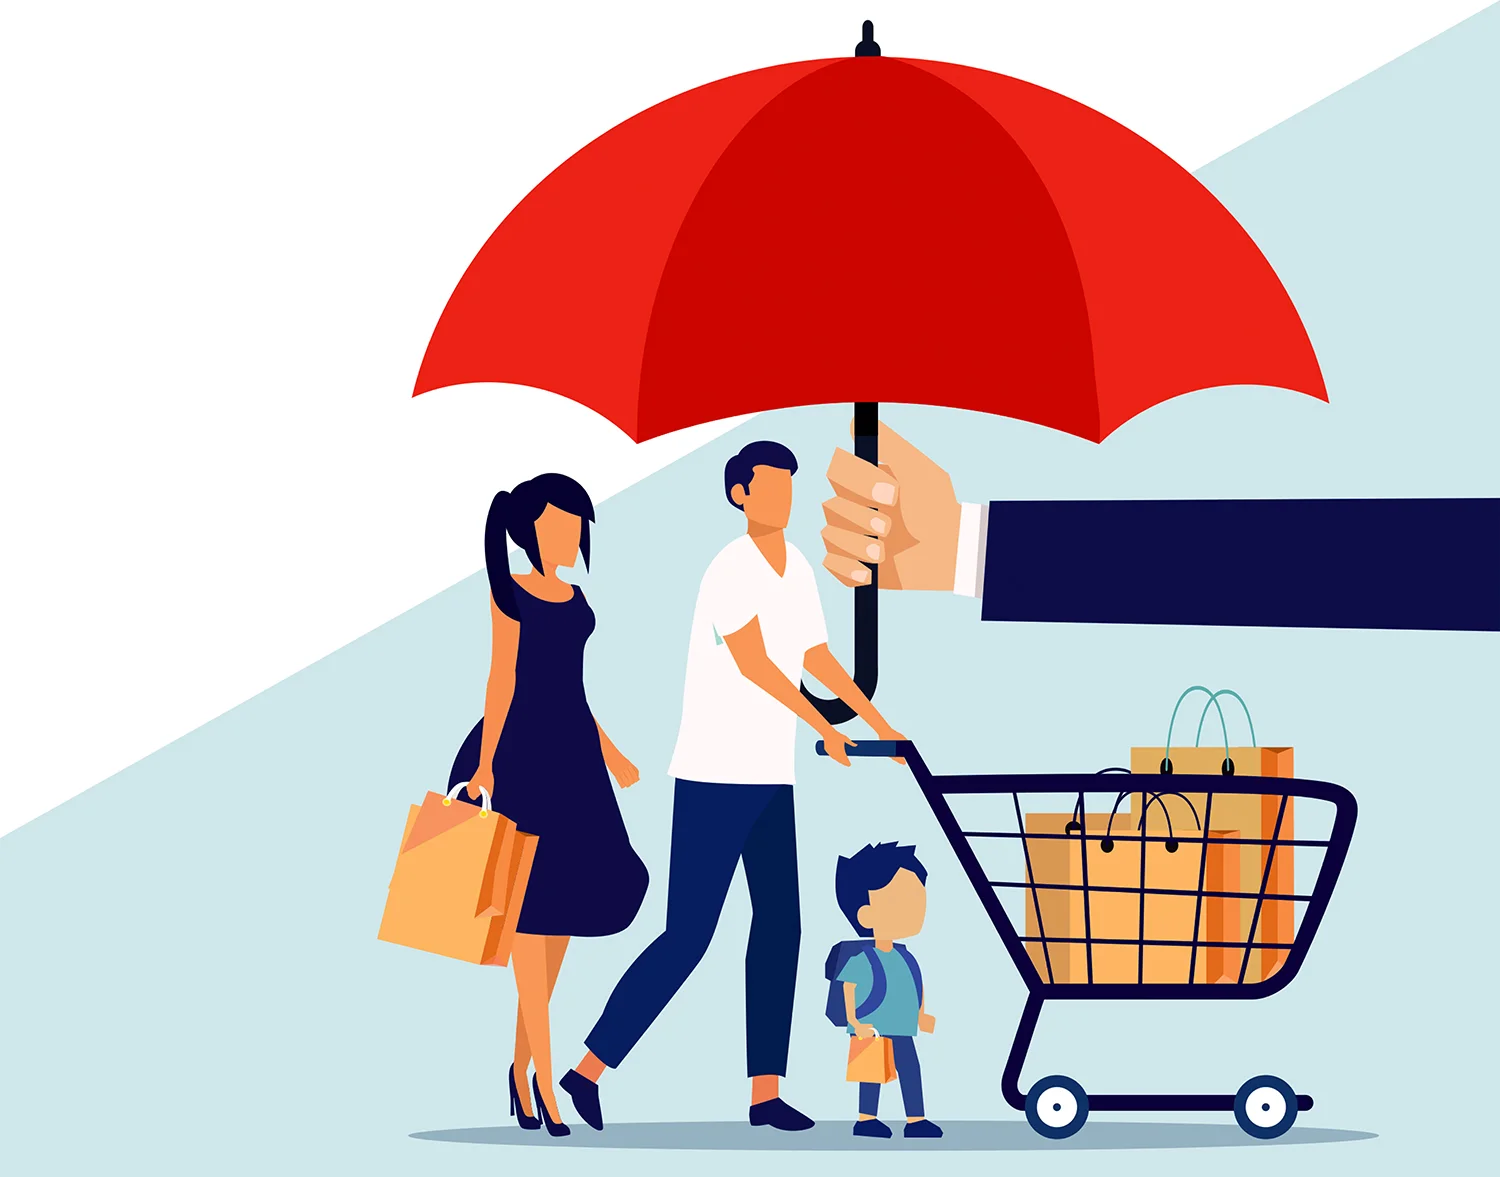 Family shopping_umbrella and insurer concept